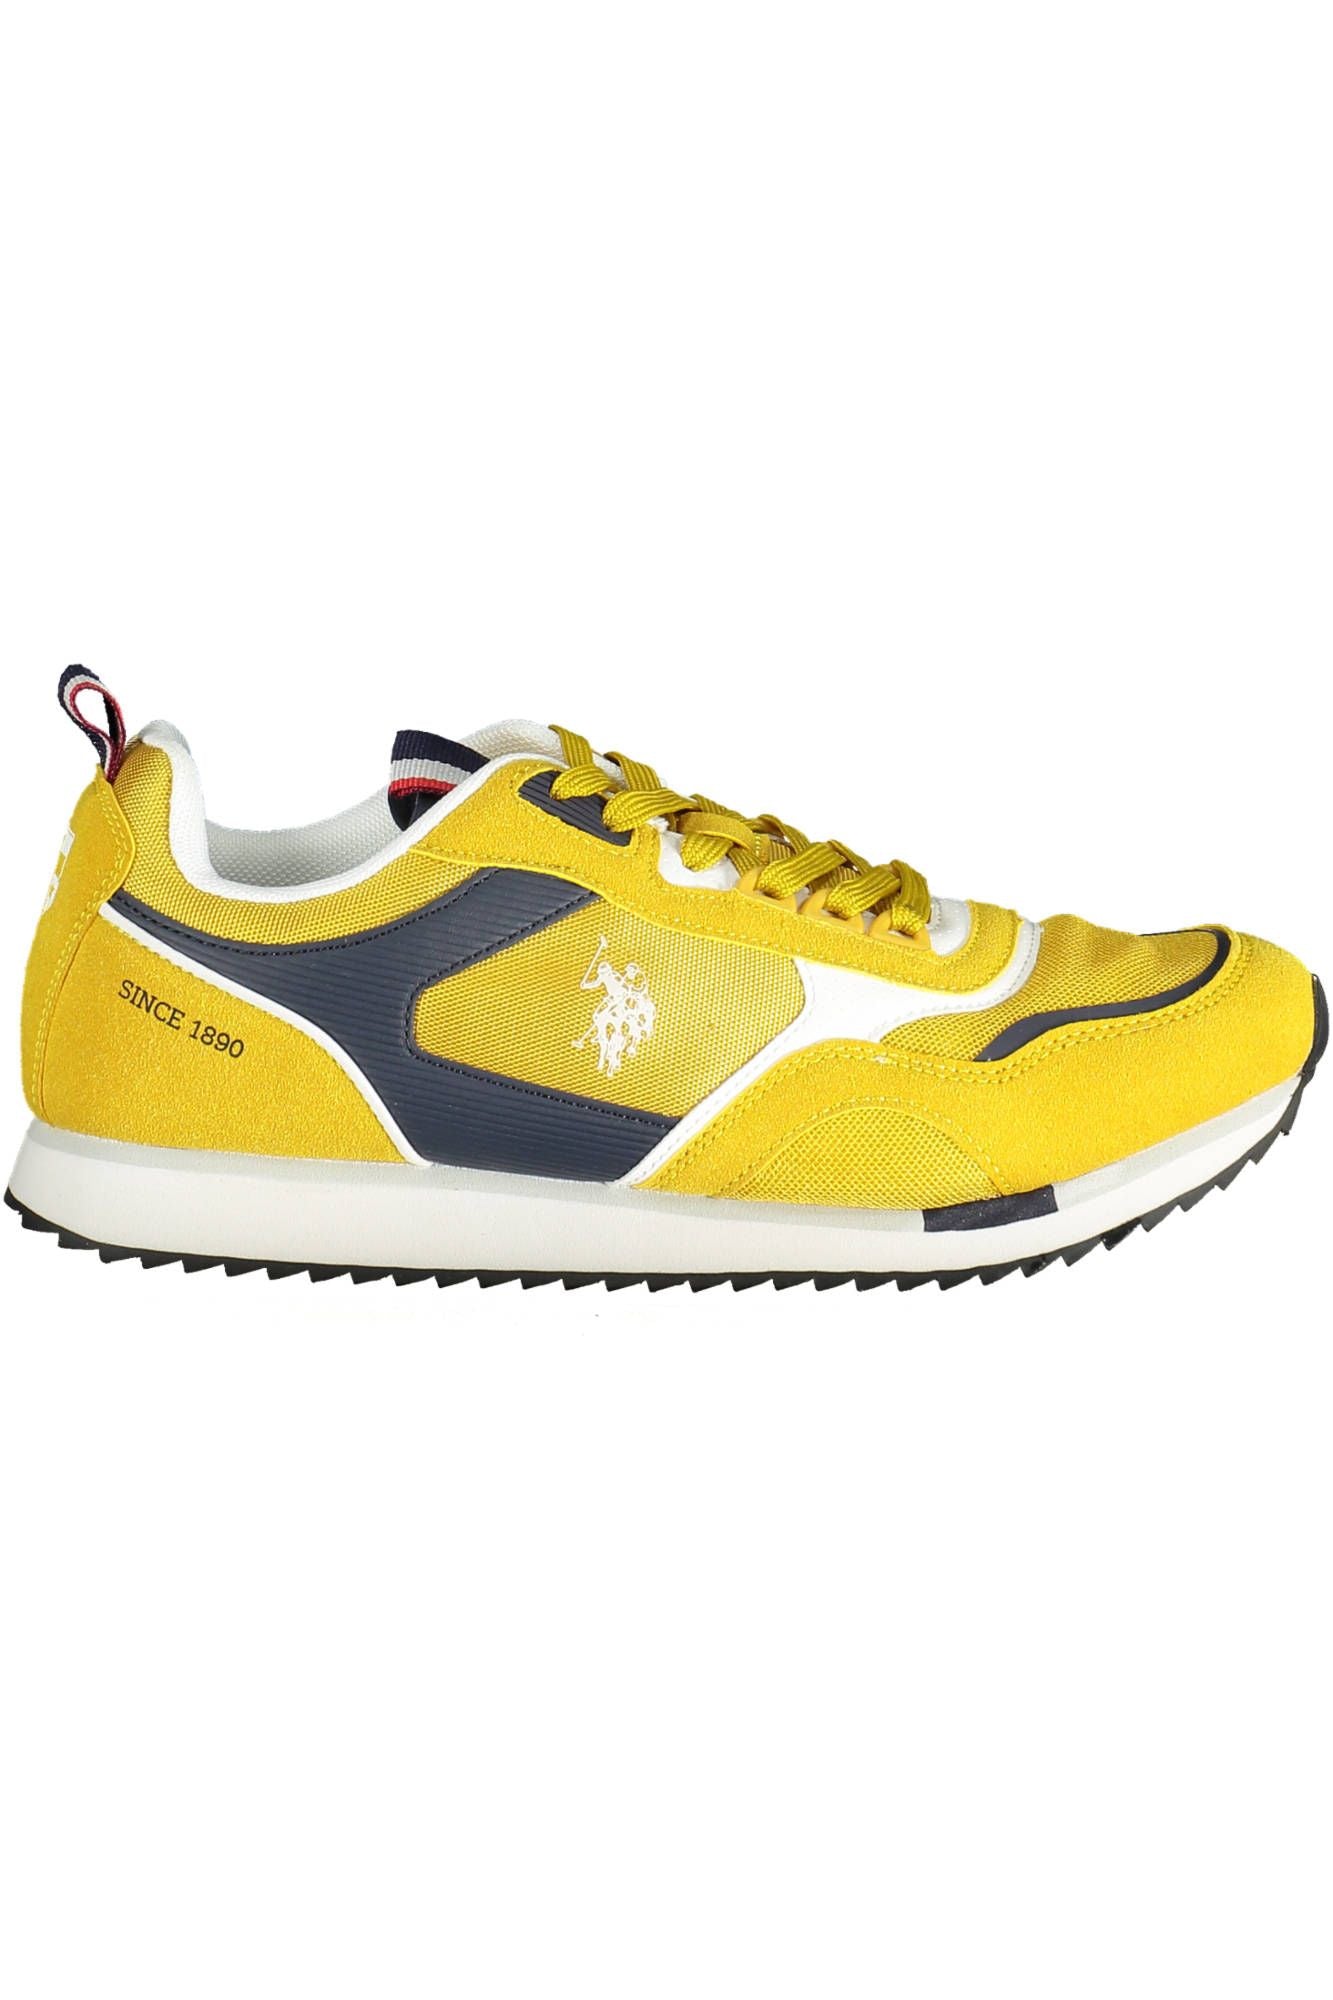 U.S. POLO ASSN. Dashing Yellow Lace-Up Sports Sneakers